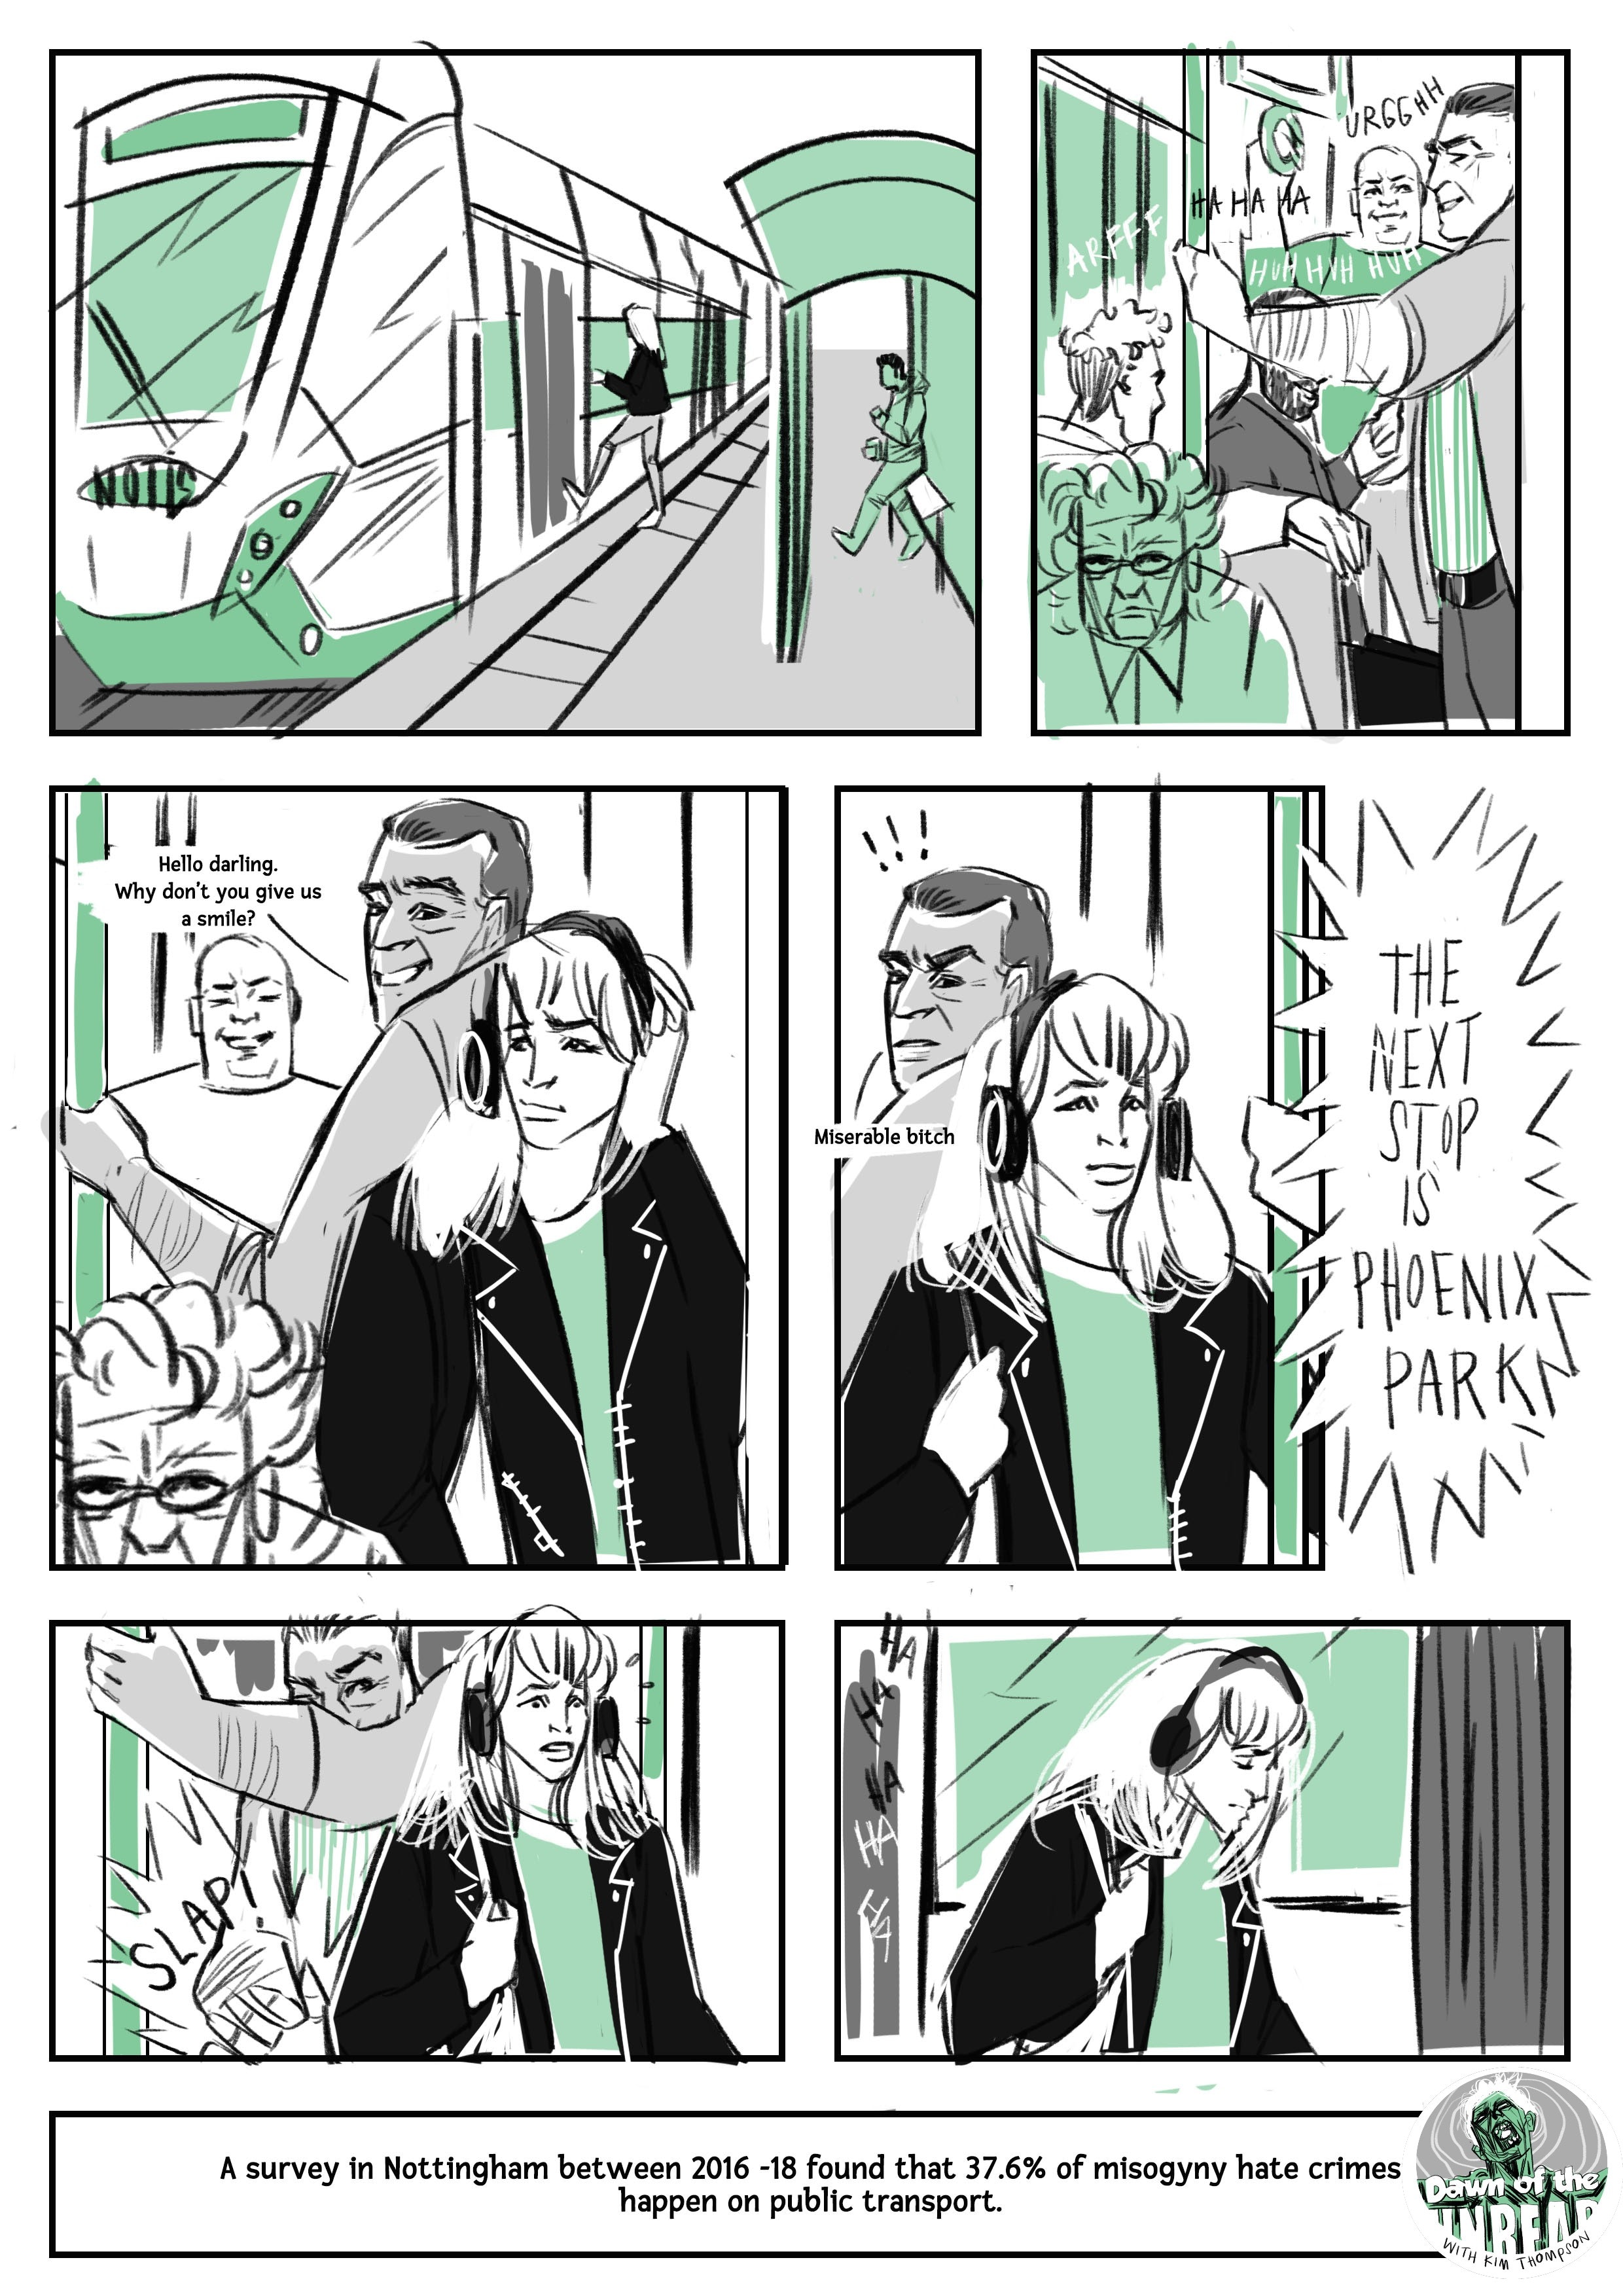 A comic strip illustrating misogynistic behaviour on public transport